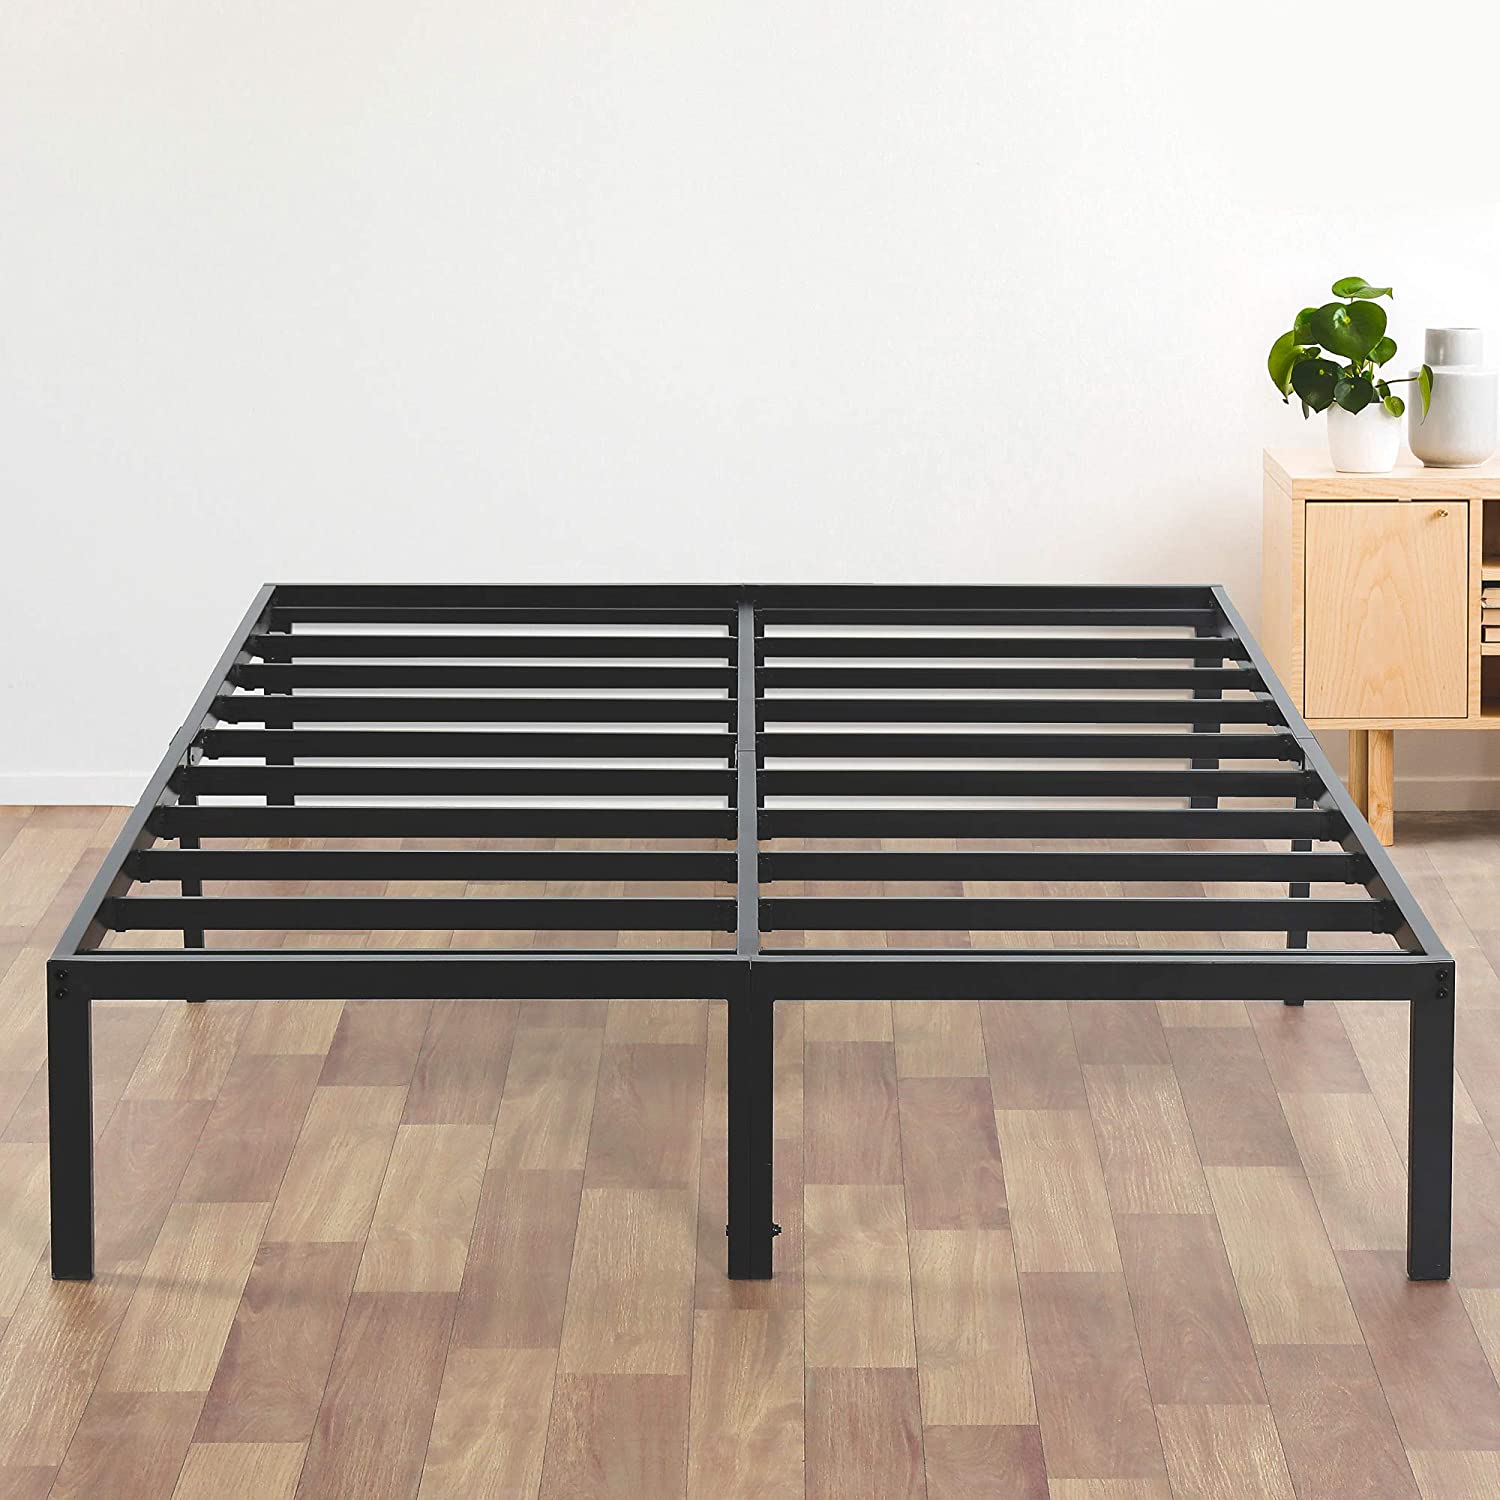 The Best Full Size Bed Frames, Full Size Bed Frame Size